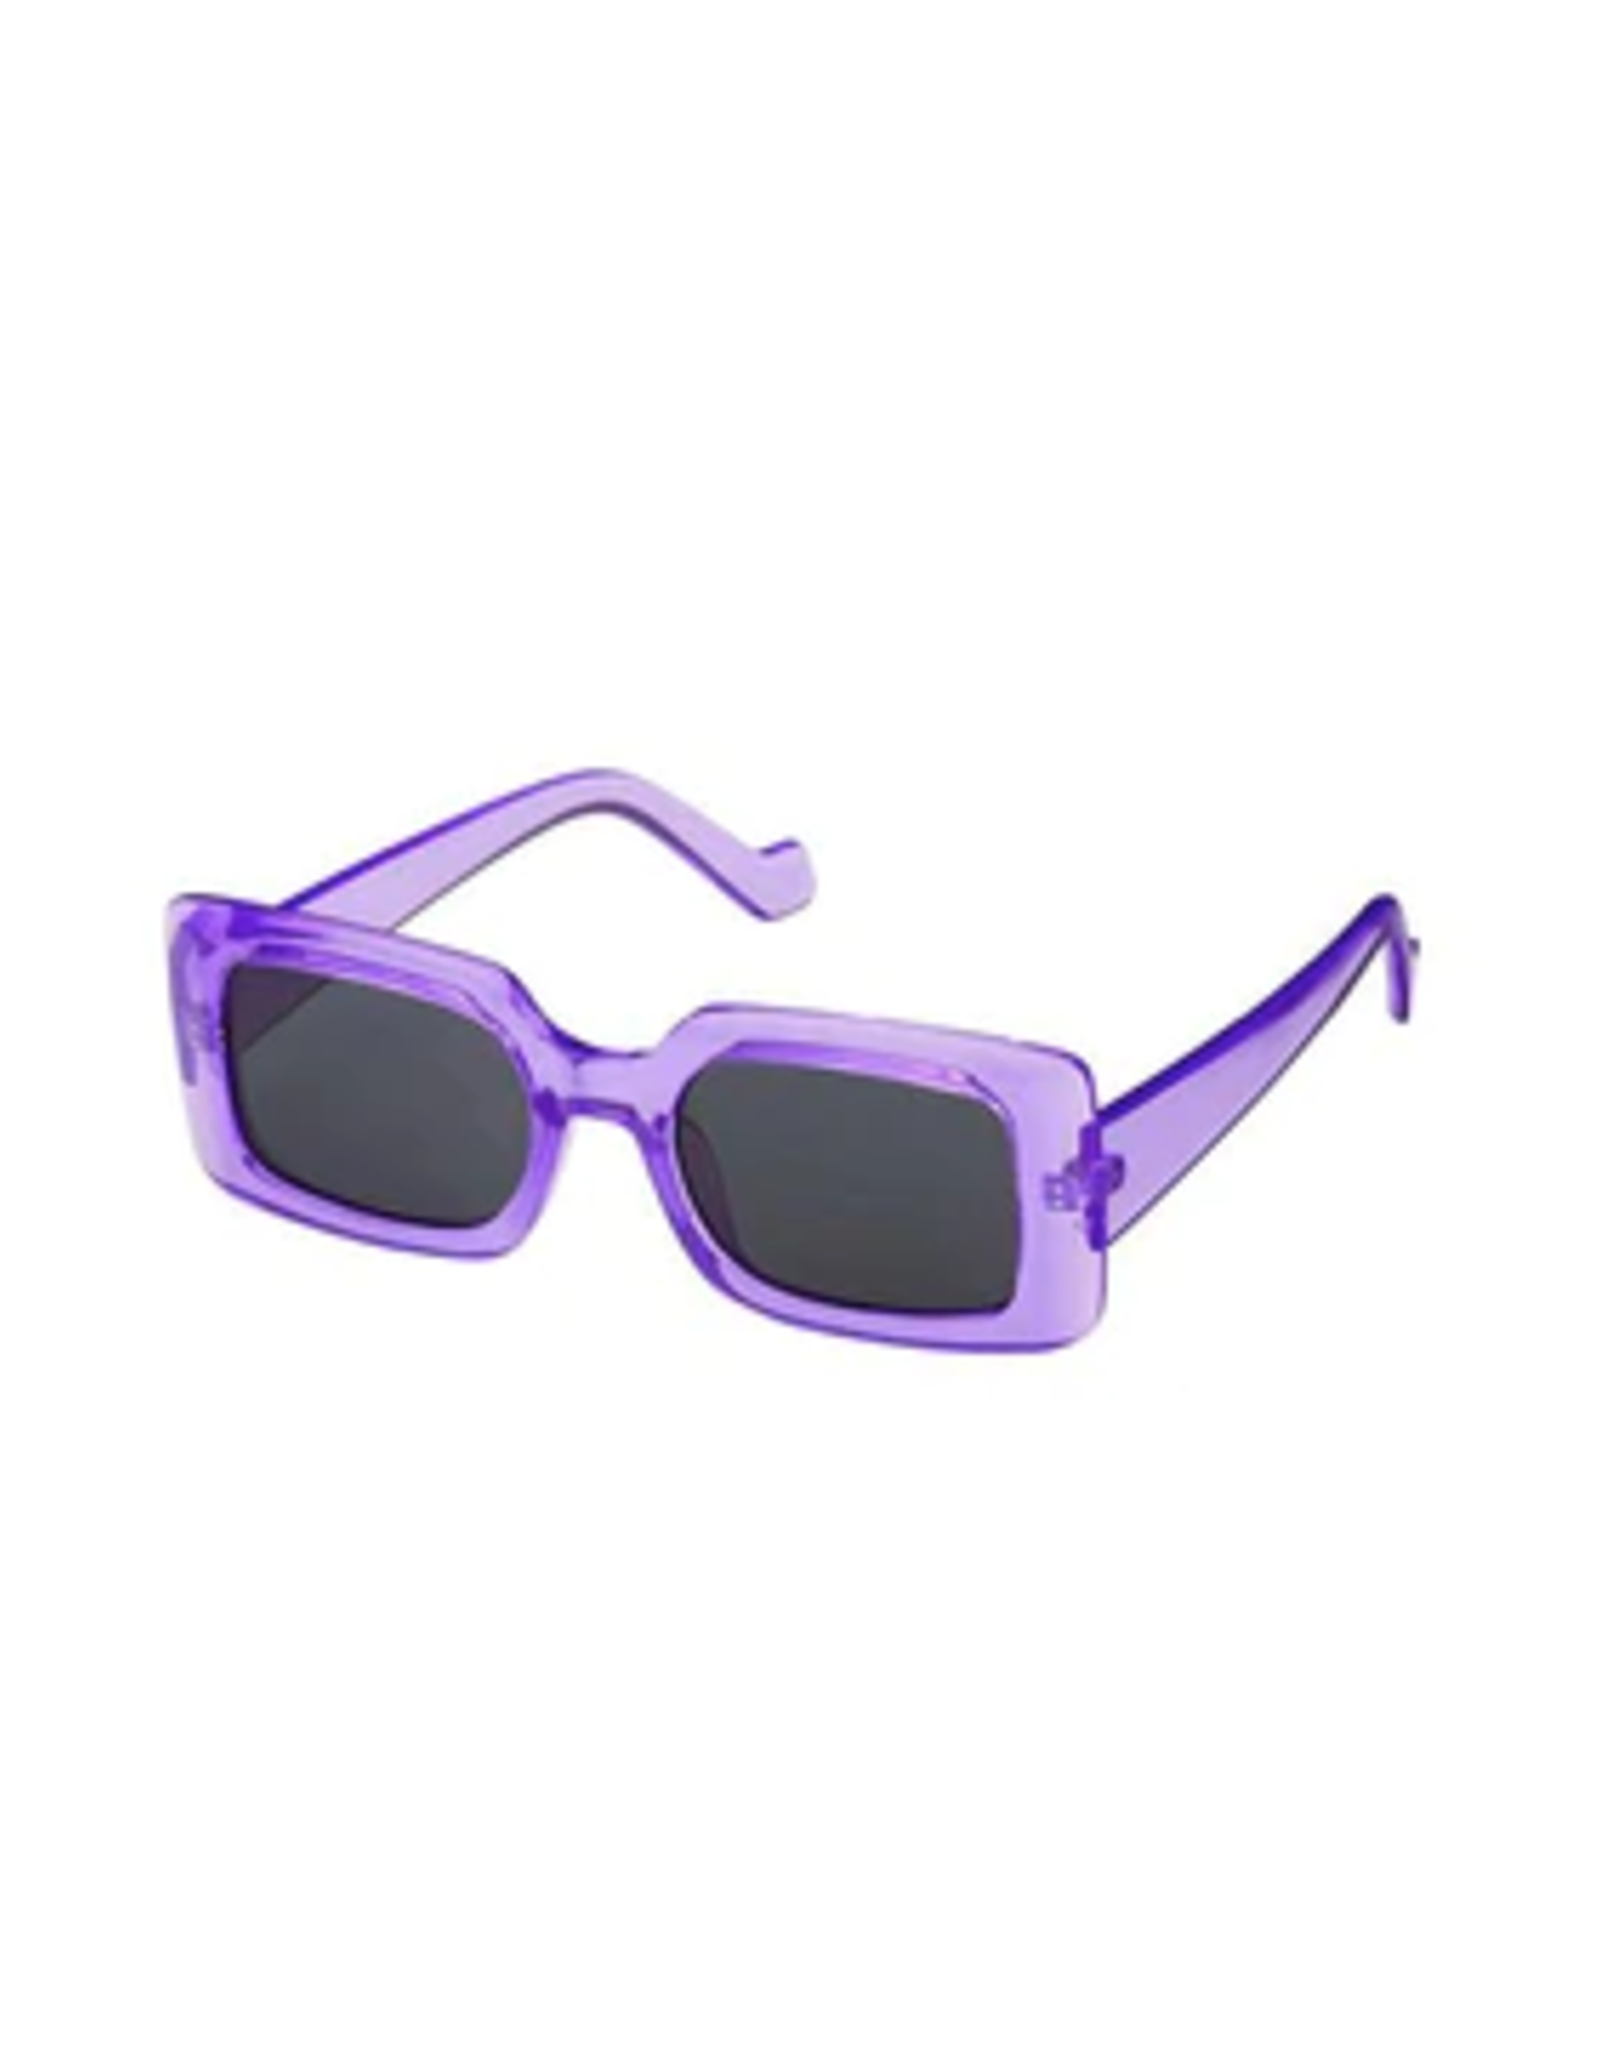 The Future is Bright Sunglasses (3 Colors!)